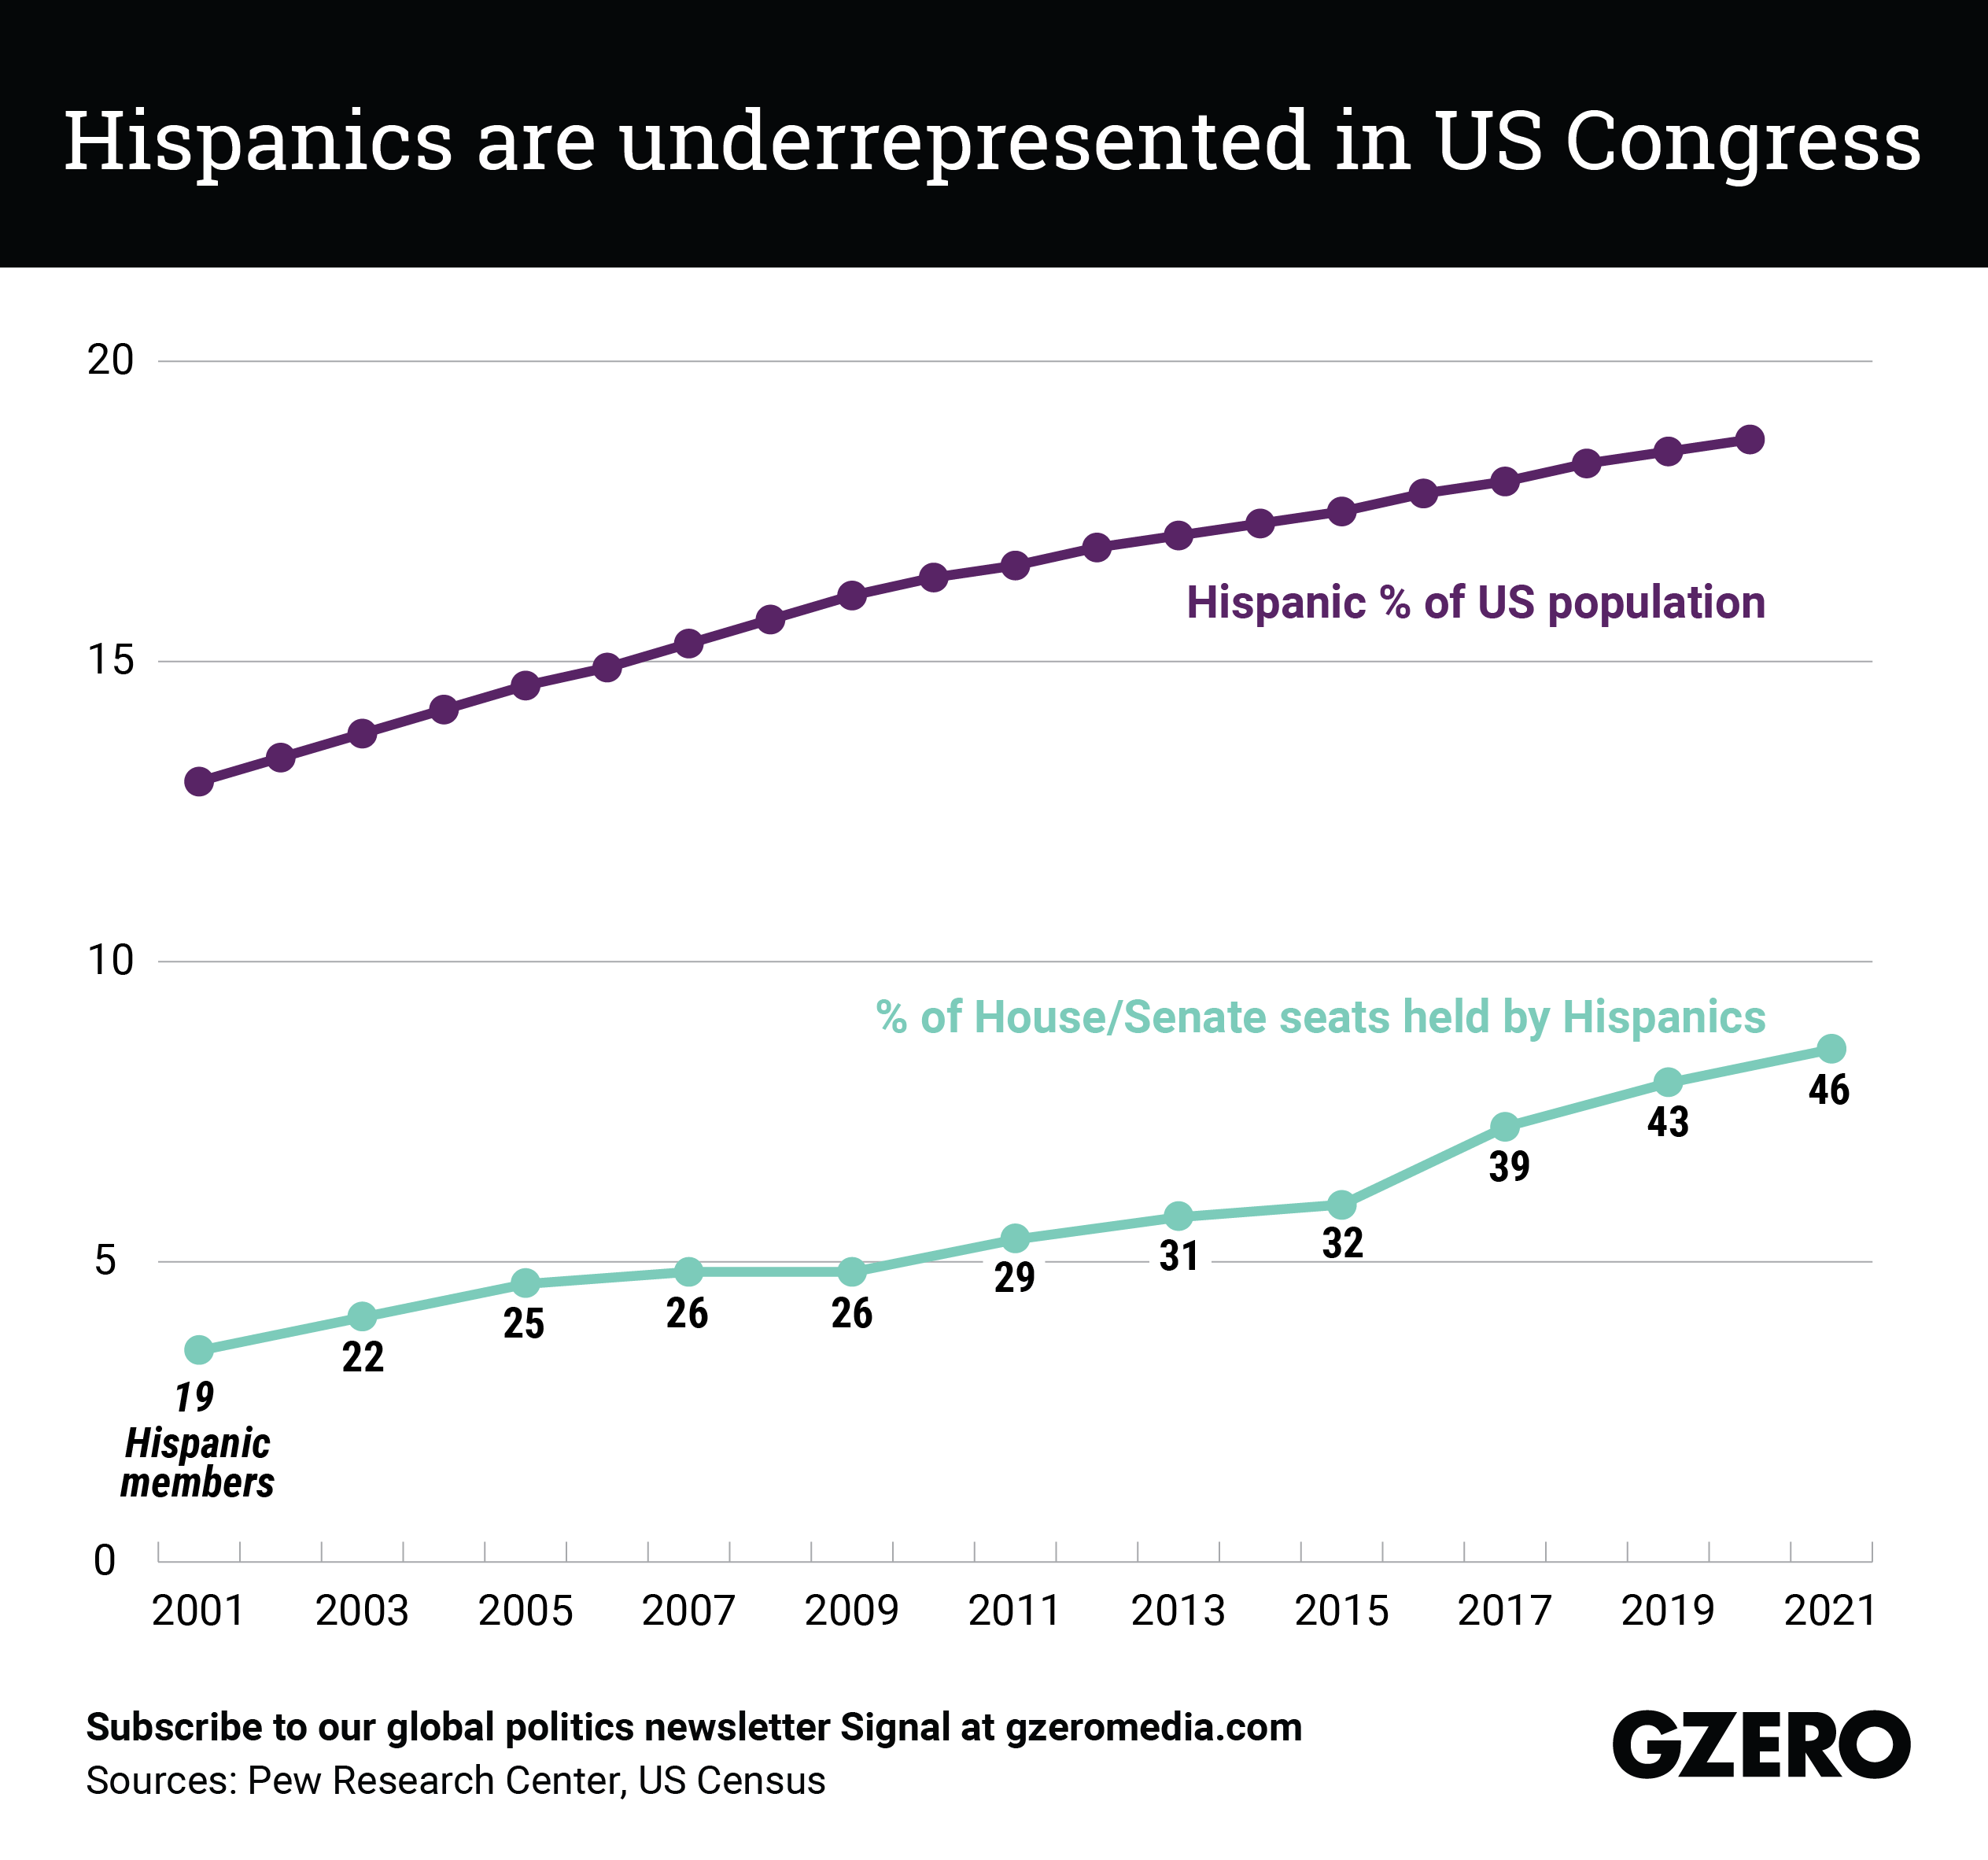 The Graphic Truth: Hispanics are underrepresented in US Congress